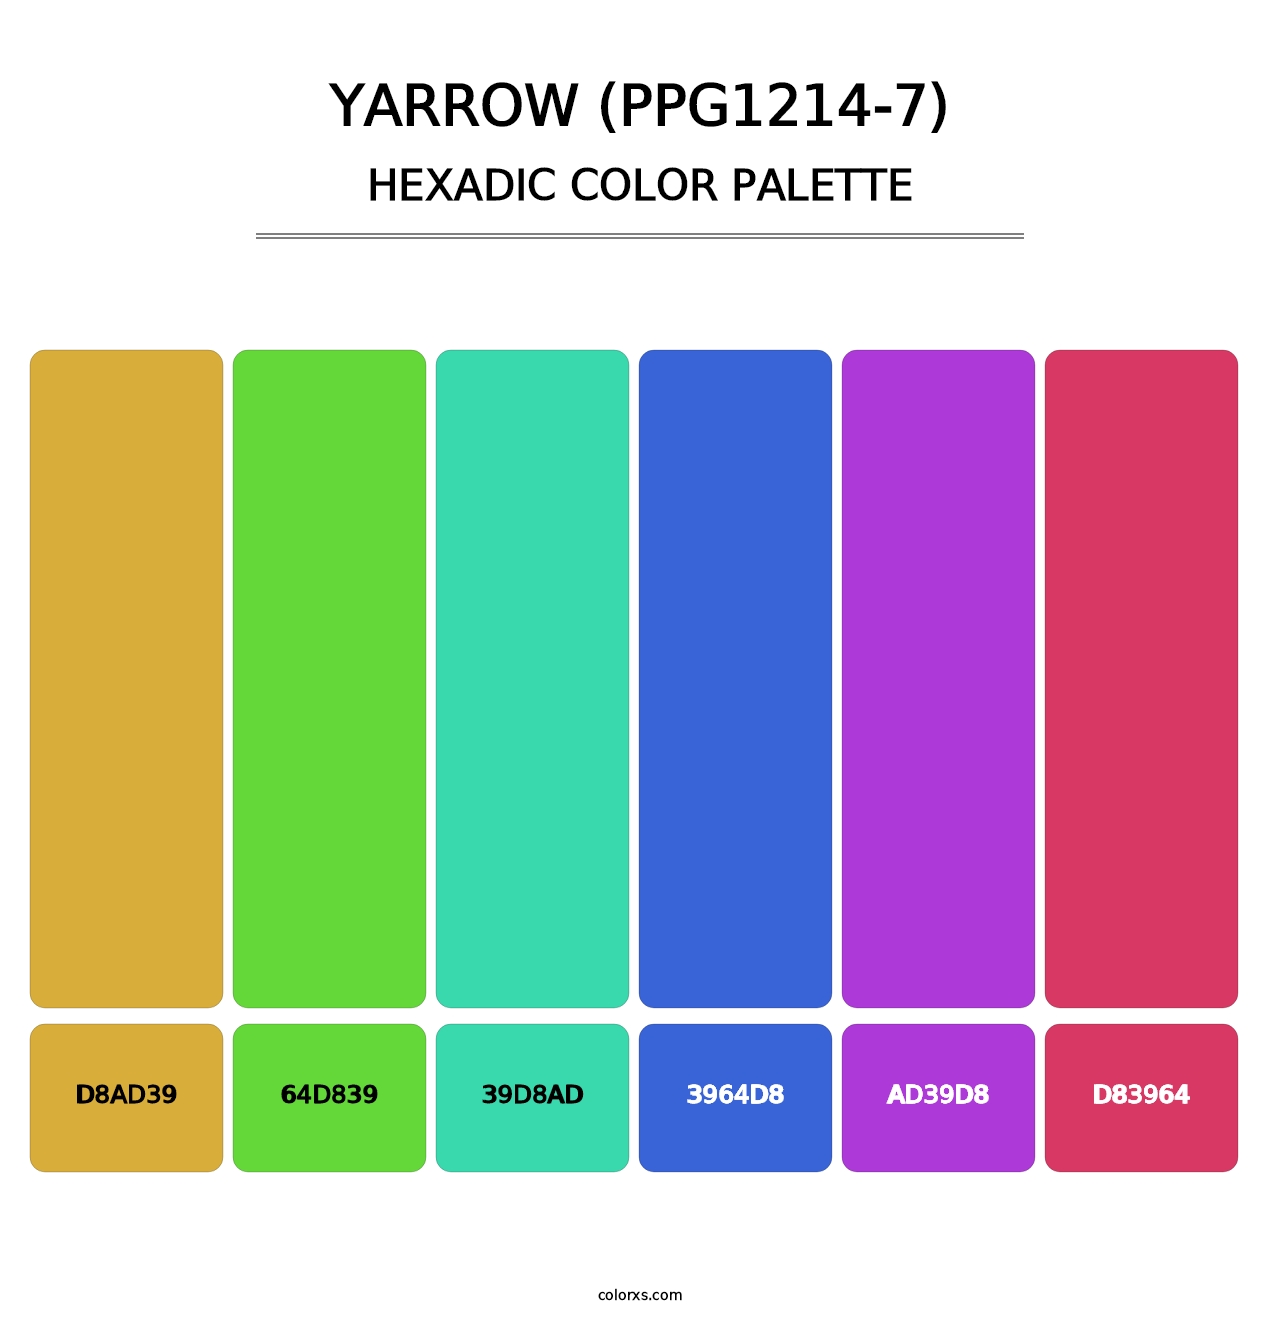 Yarrow (PPG1214-7) - Hexadic Color Palette